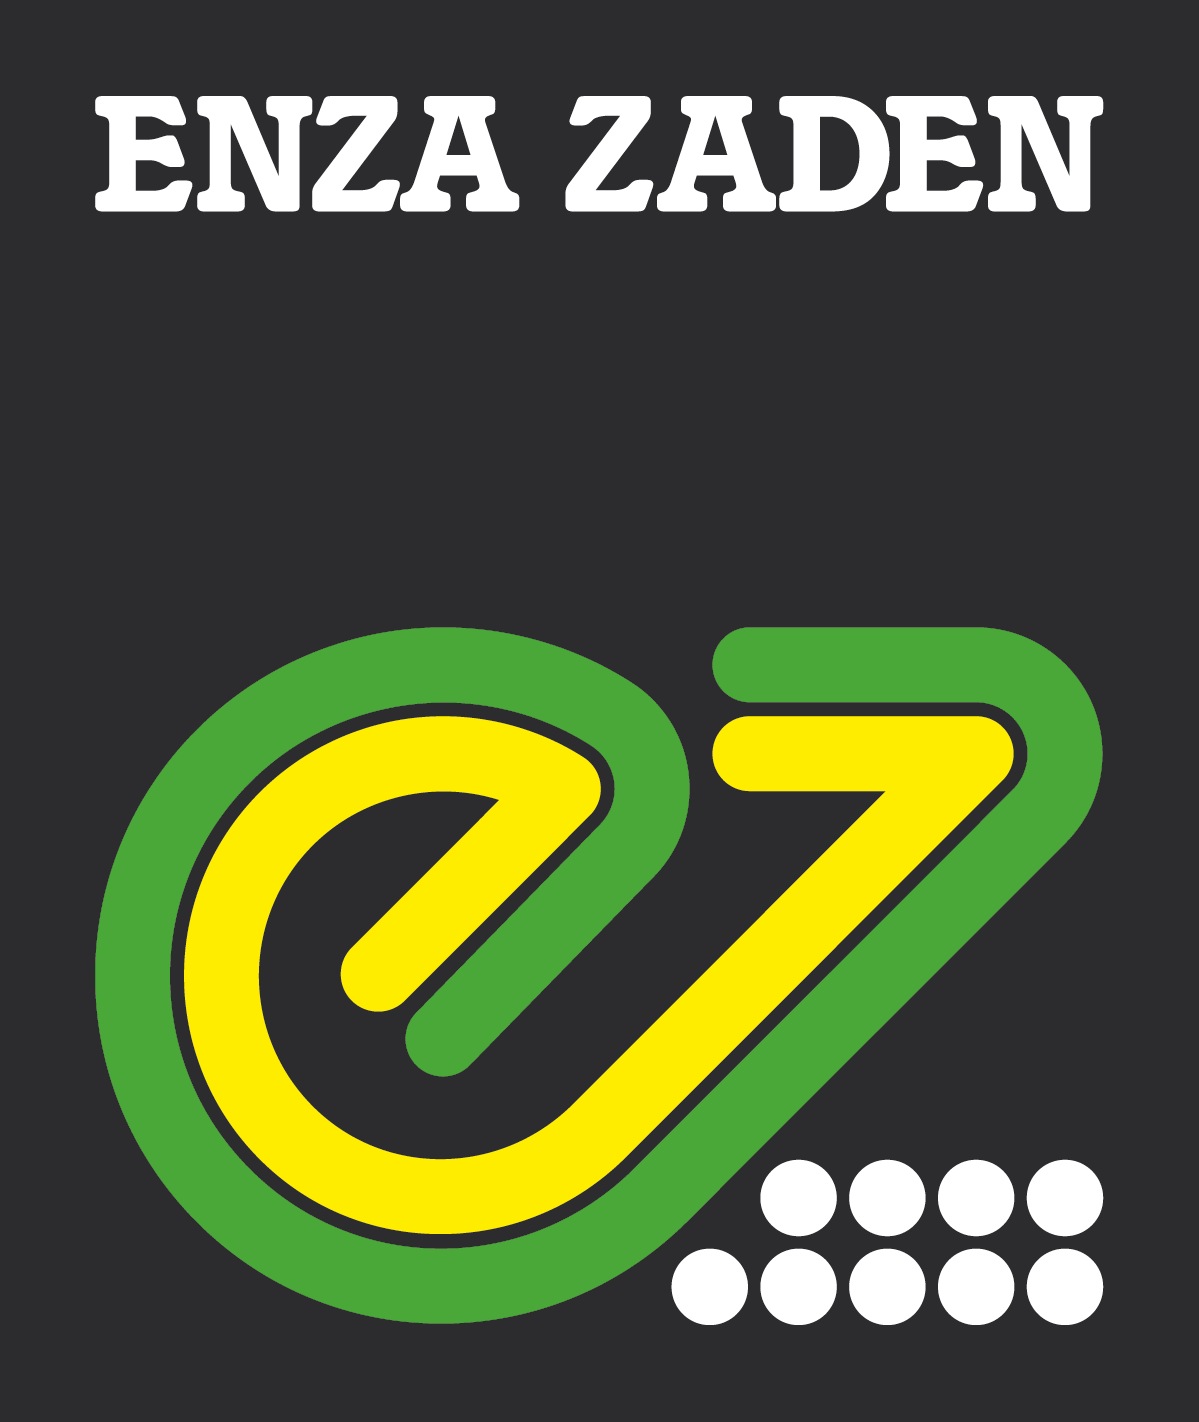 Enza Zaden Logo